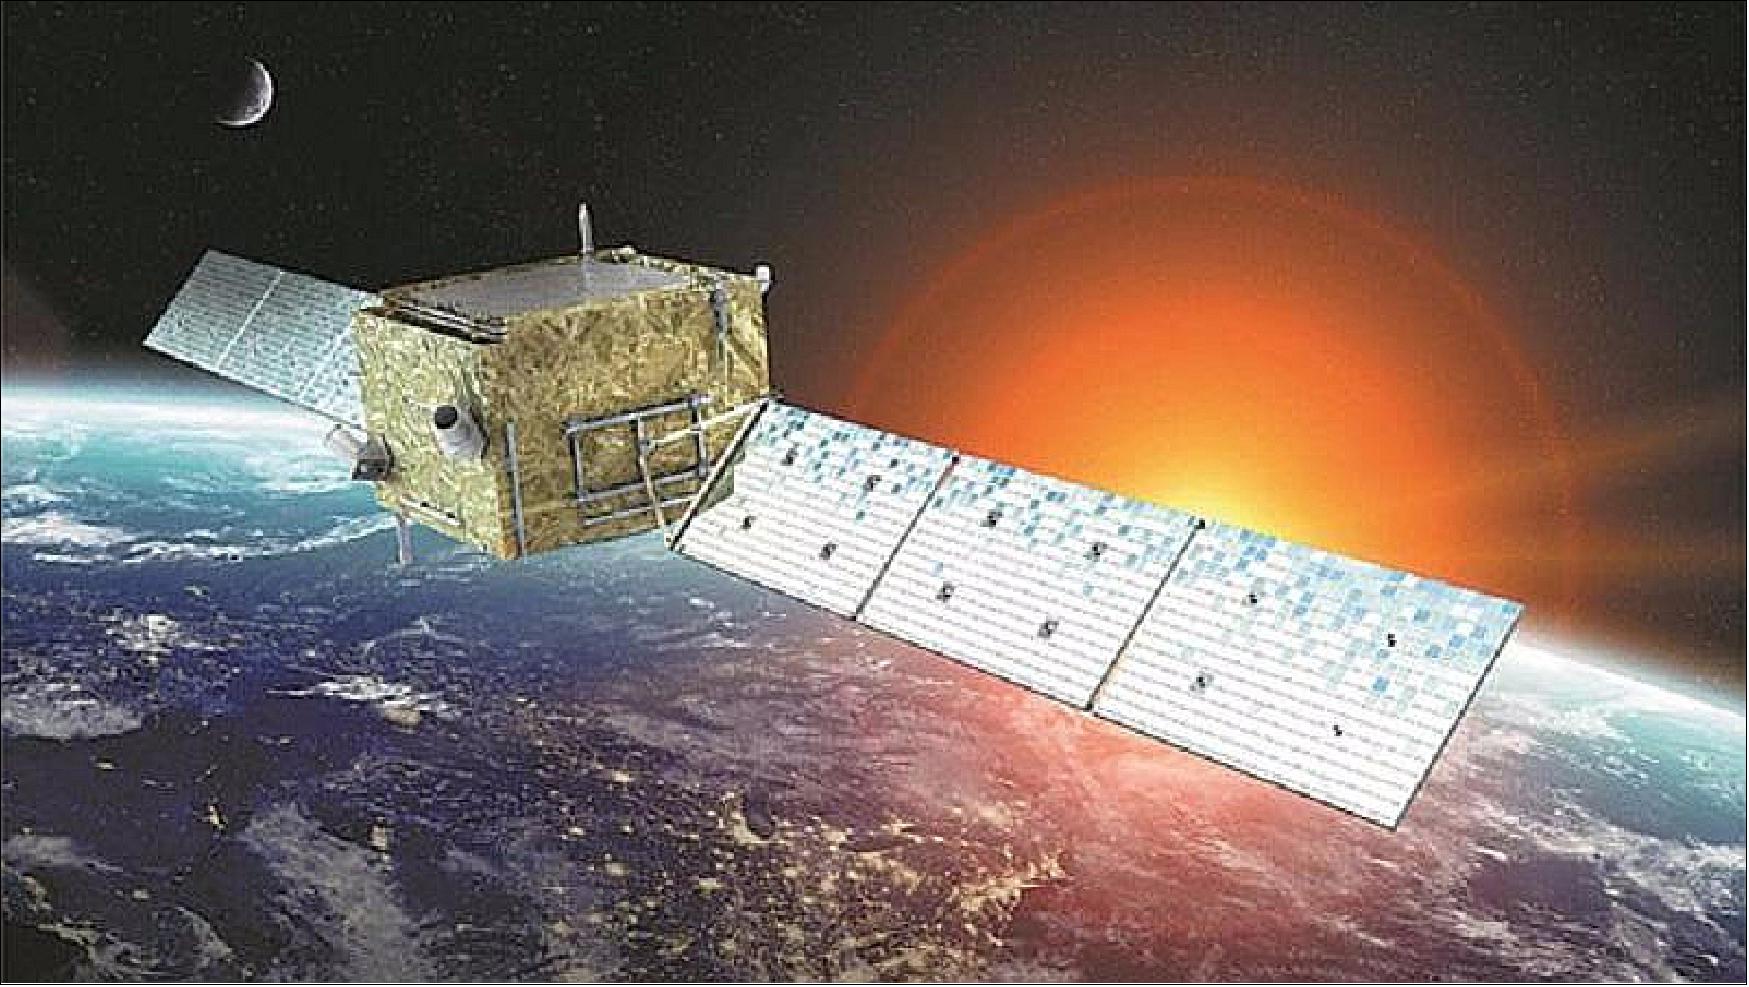 Figure 3: Illustration of the deployed Wukong satellite (image credit: China Daily)